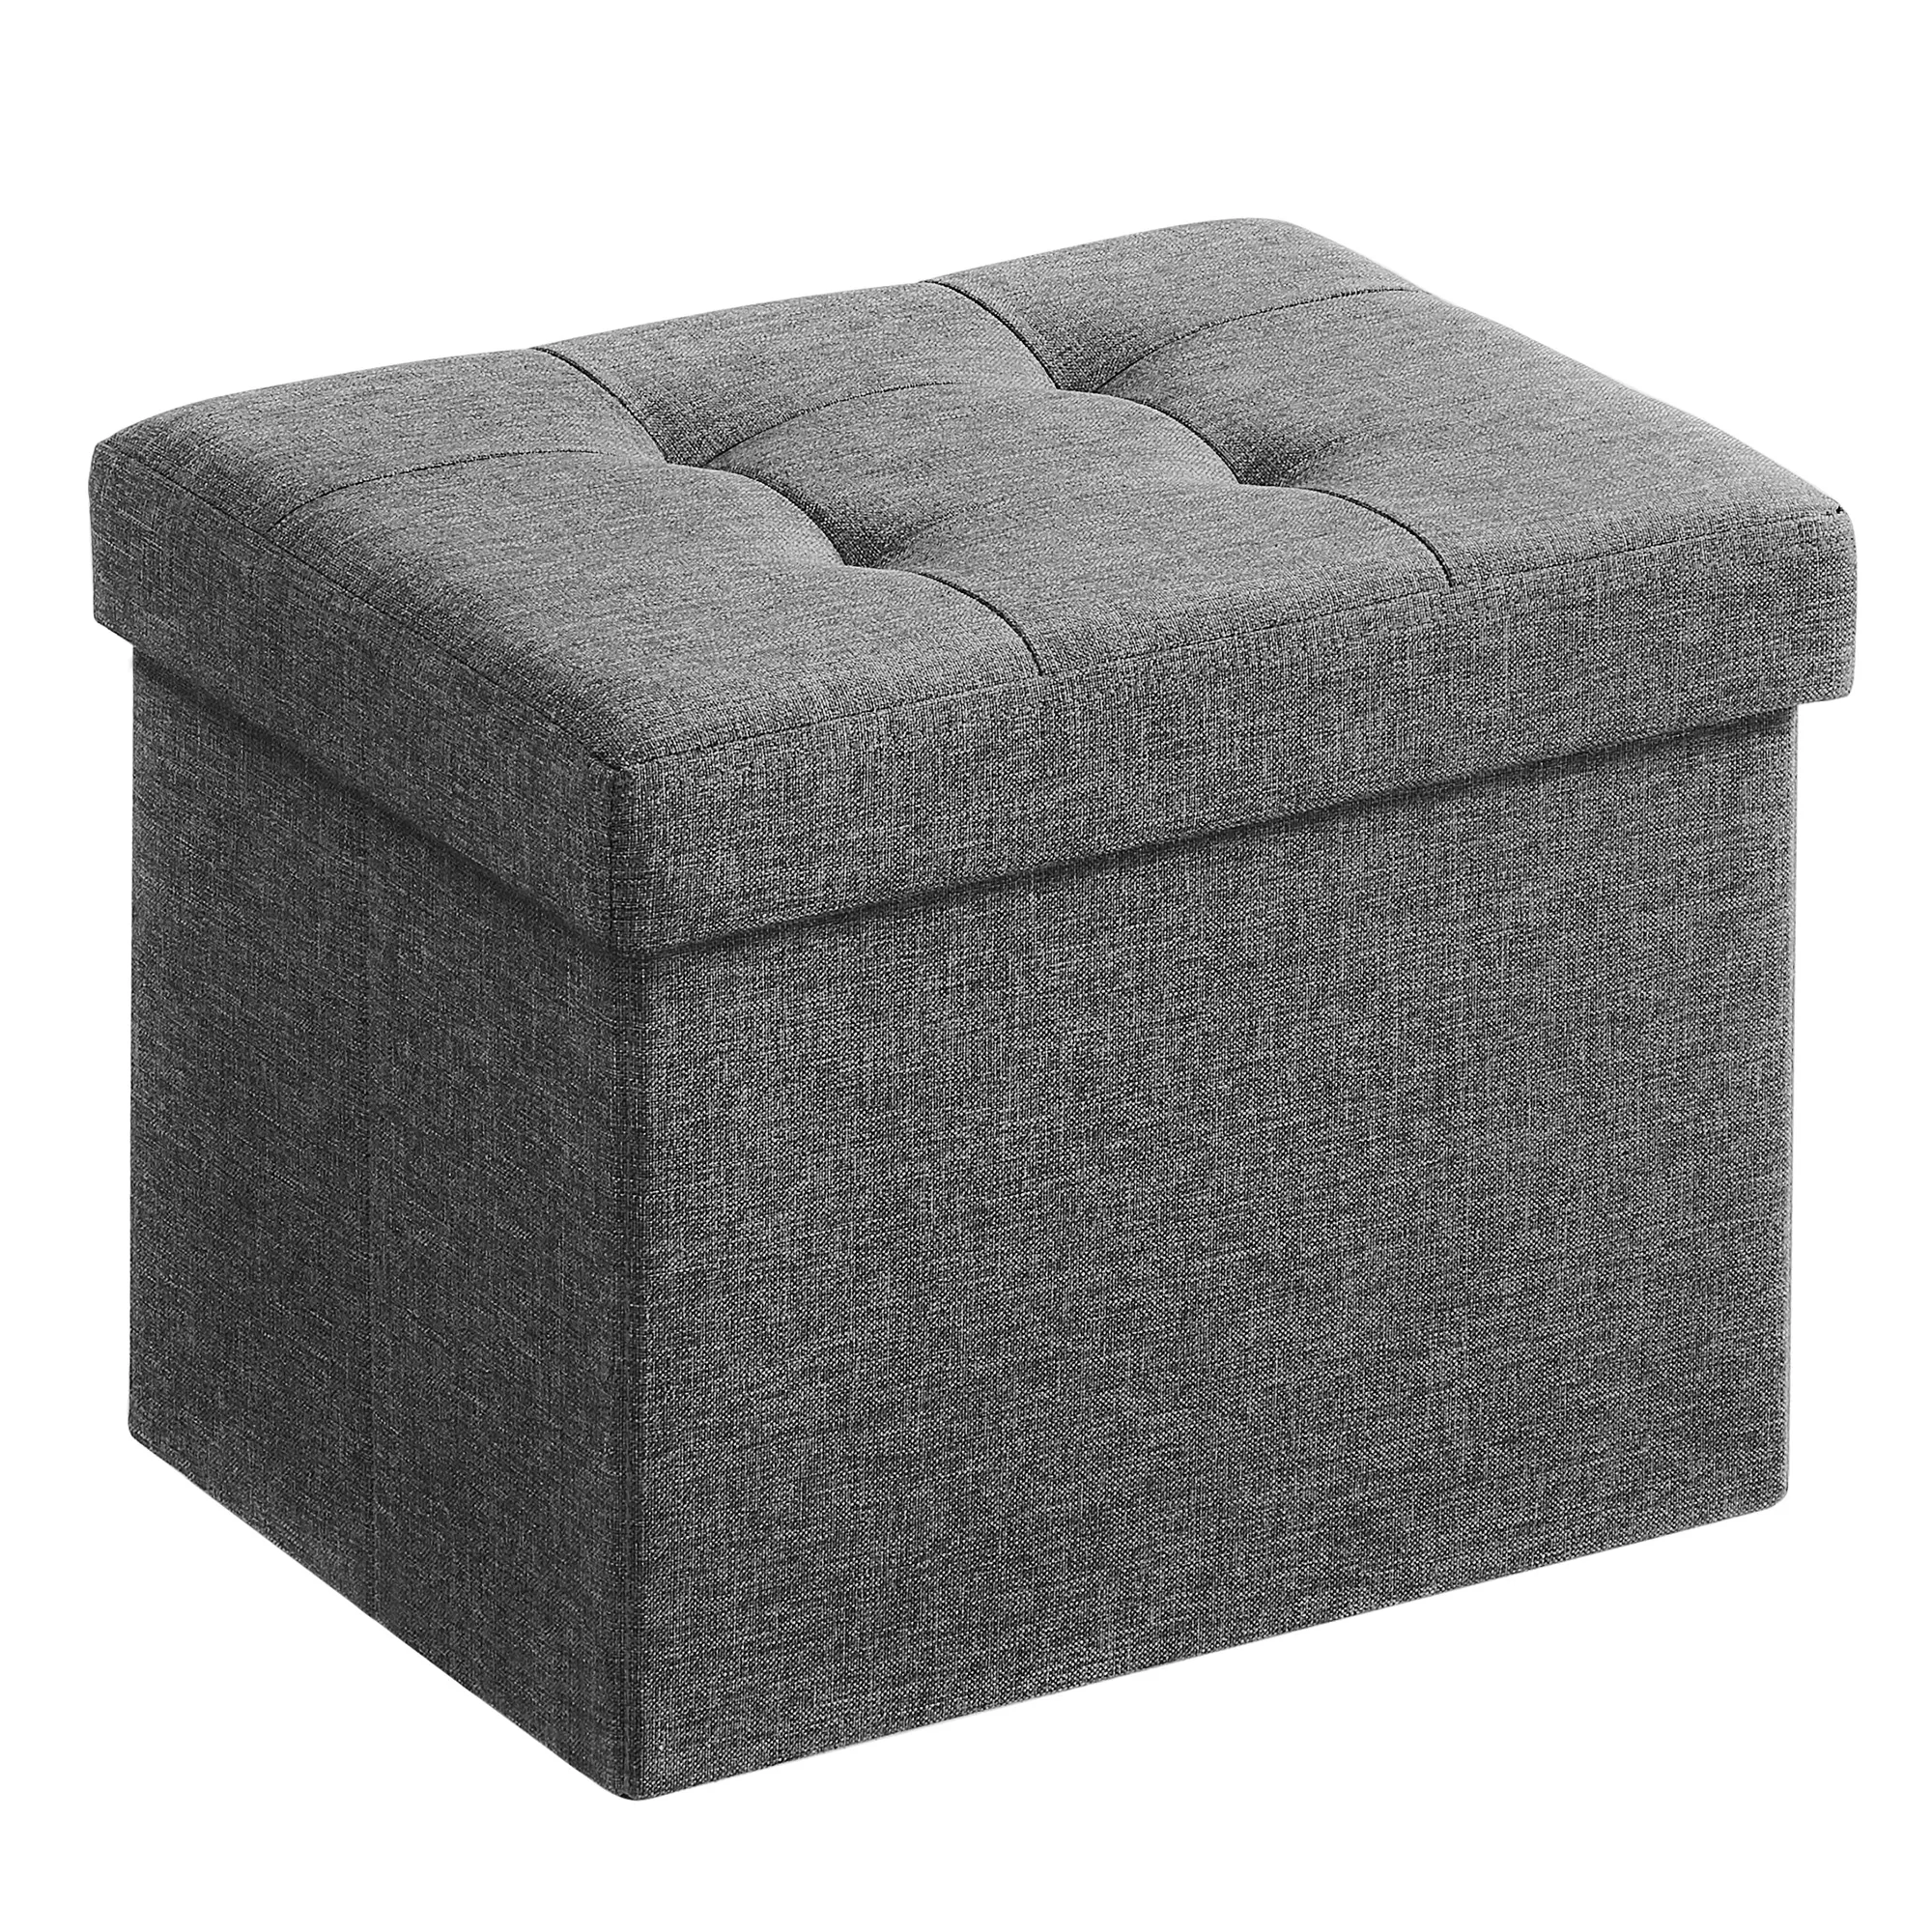 Small Size Foldable Ottoman Storage Bench Dark Gray Stool Storage Box Ottoman Cube Stool Seat For Sofa Living Room